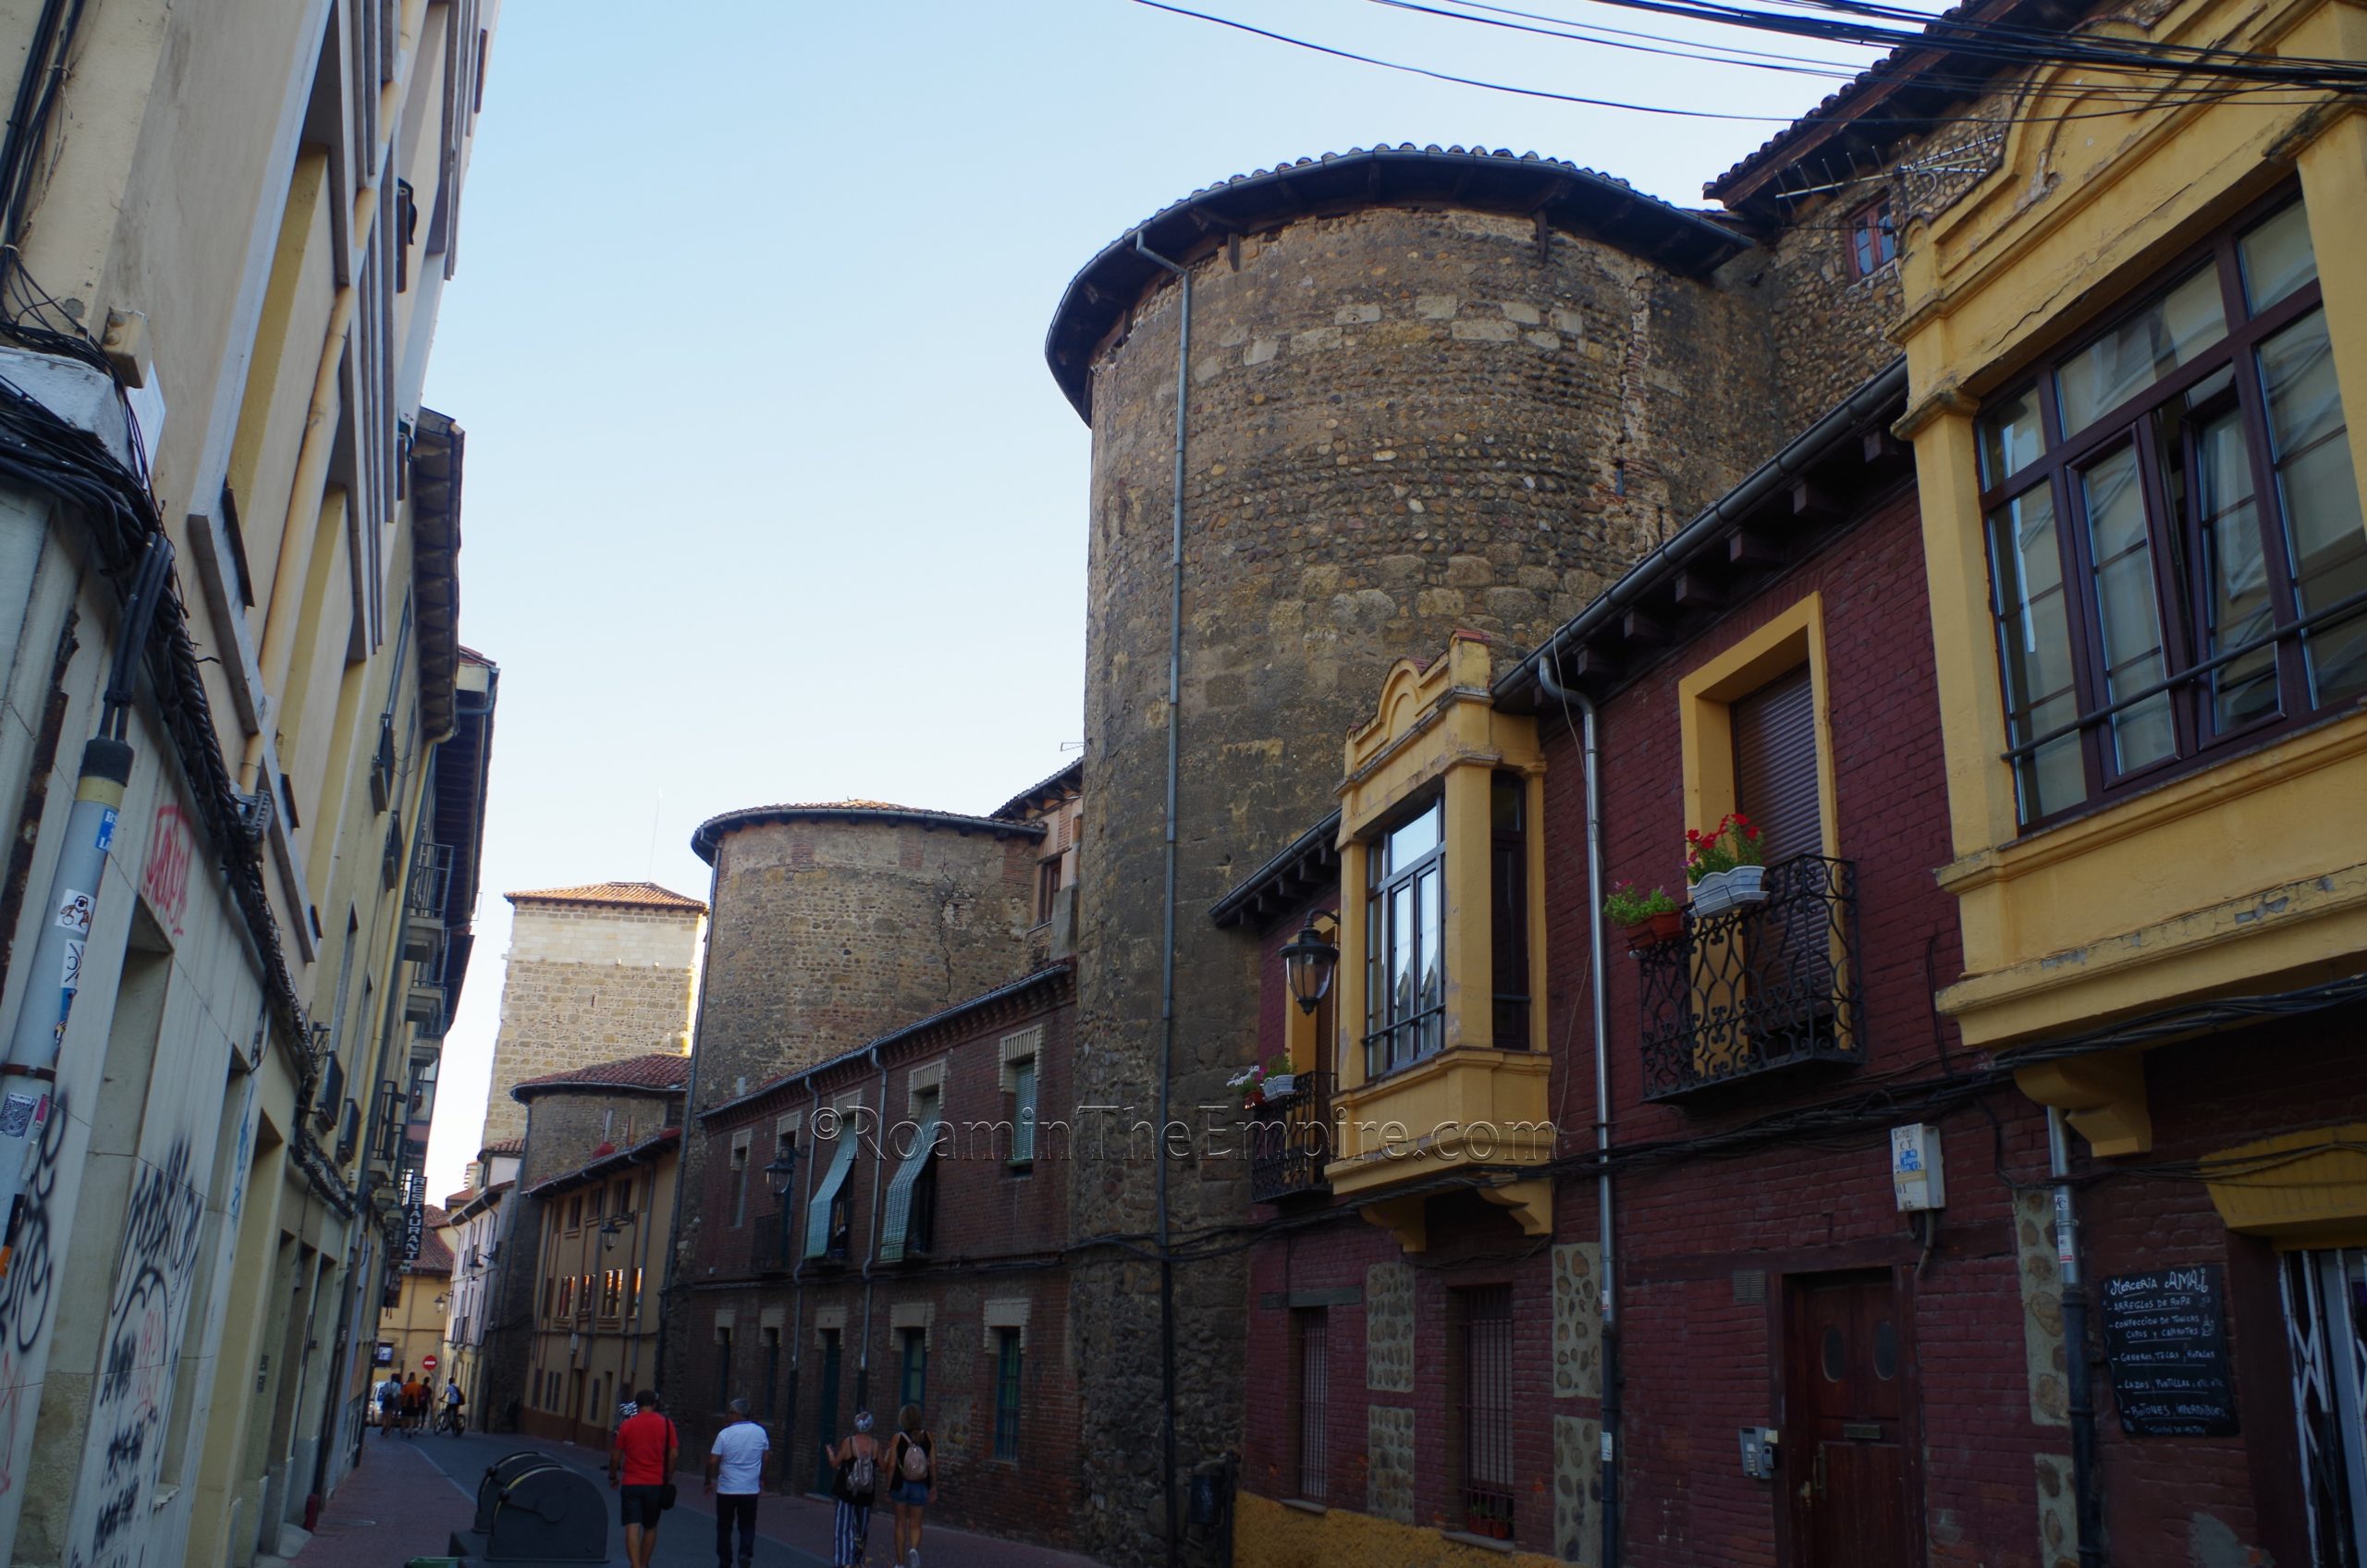 Walls and towers visible along Calle Serradores.